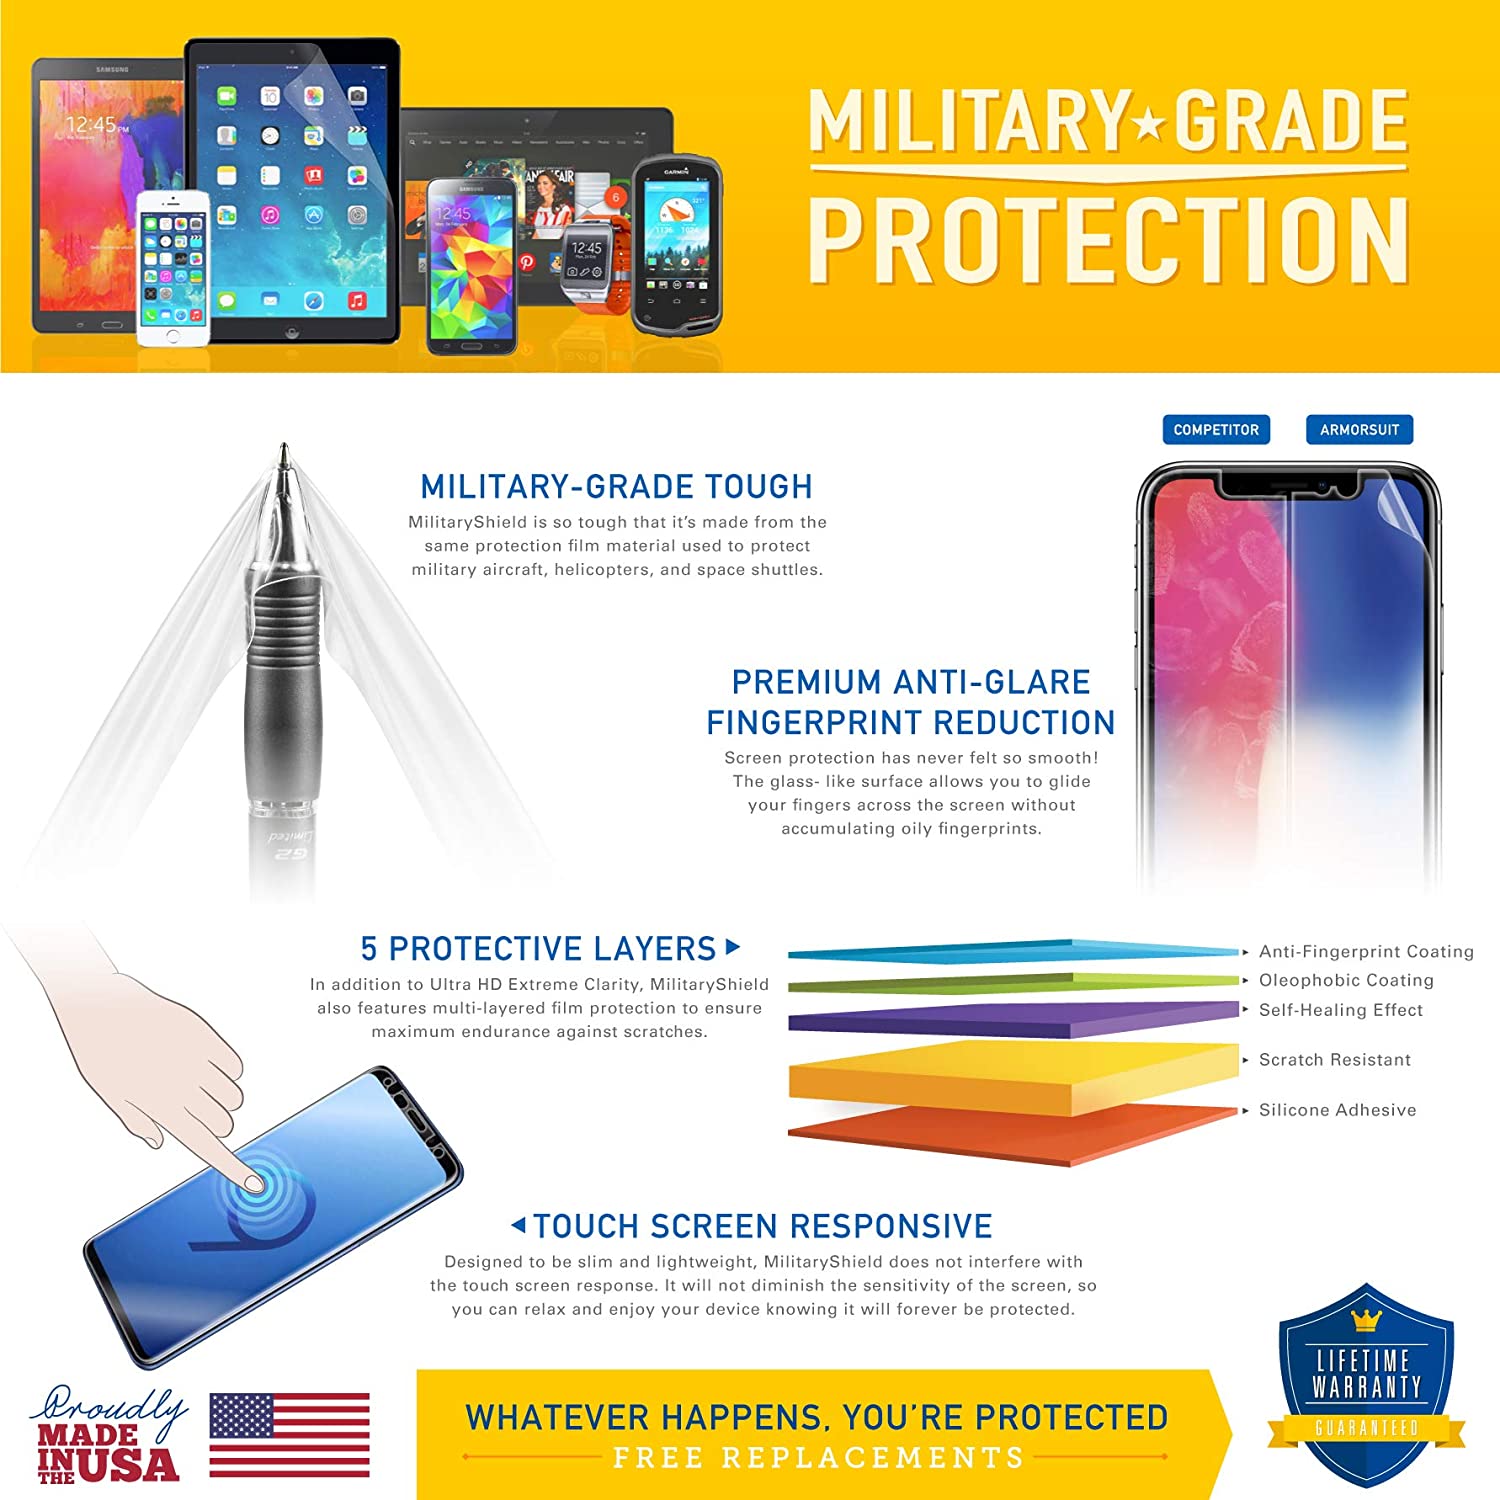 [2 Pack] Motorola Photon 4G Screen Protector